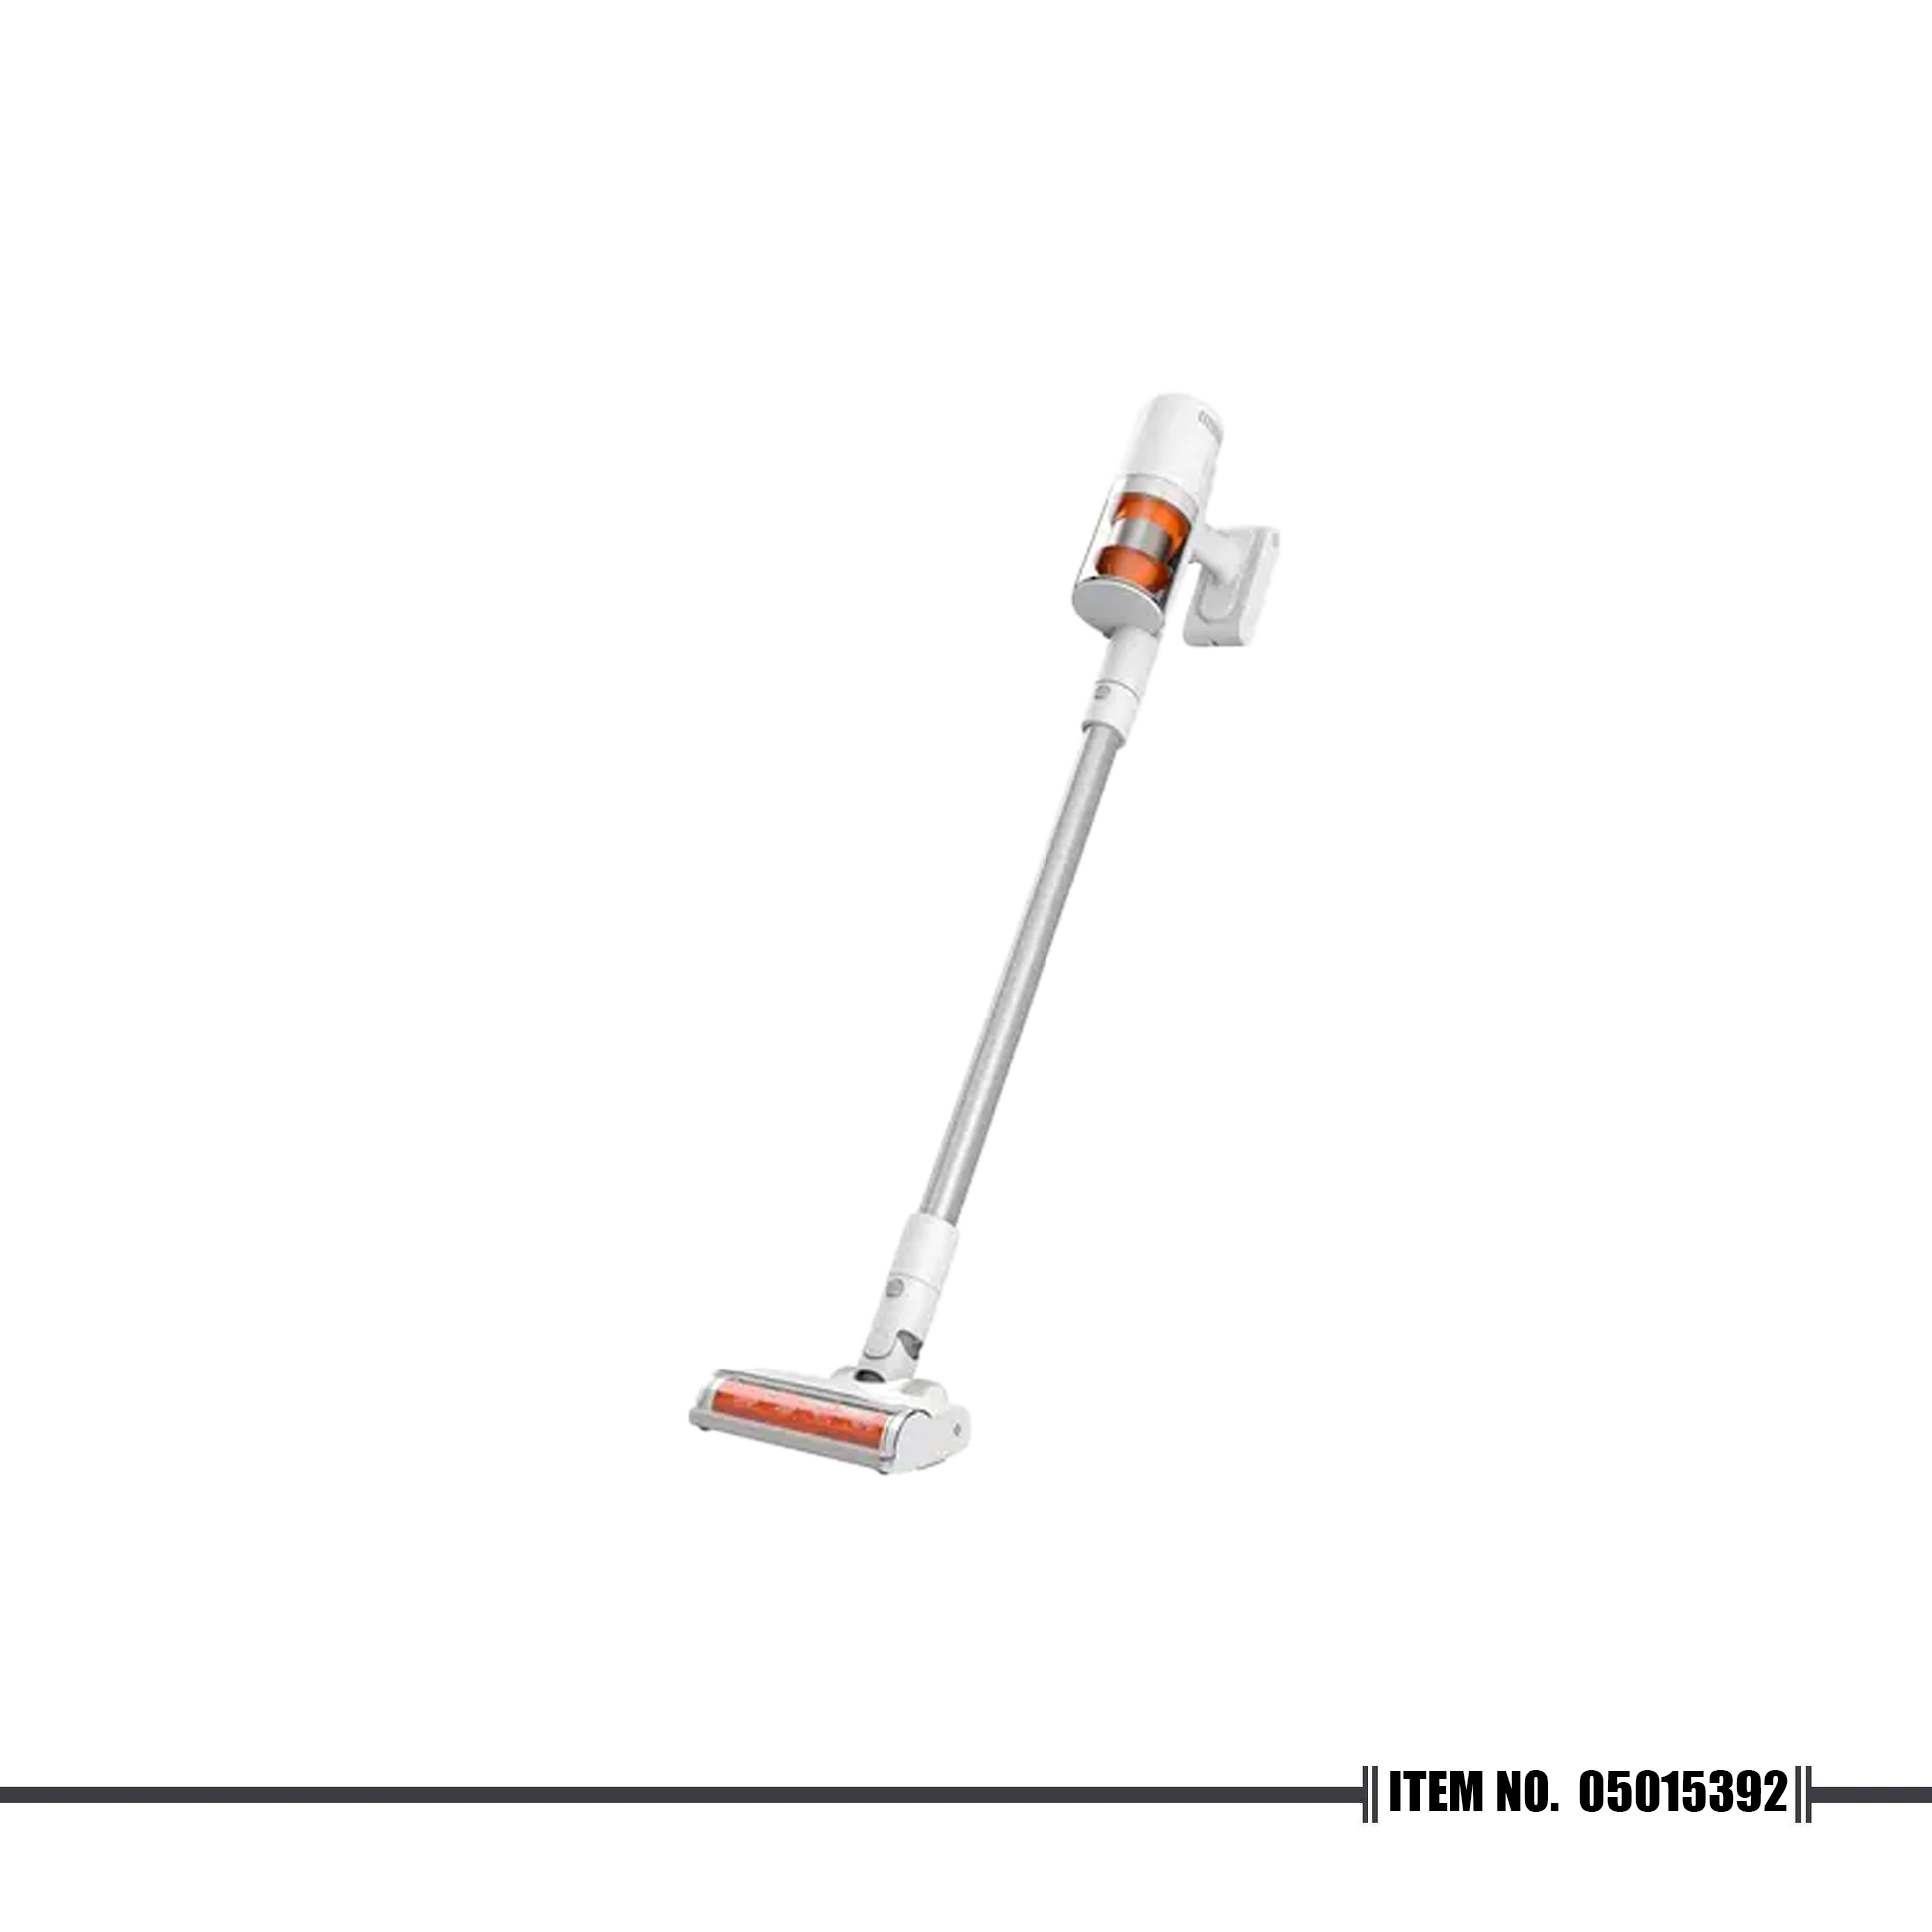 XIAOMI Vacuum Cleaner Mi Handheld Cordless G11 - HEPA Filter EU